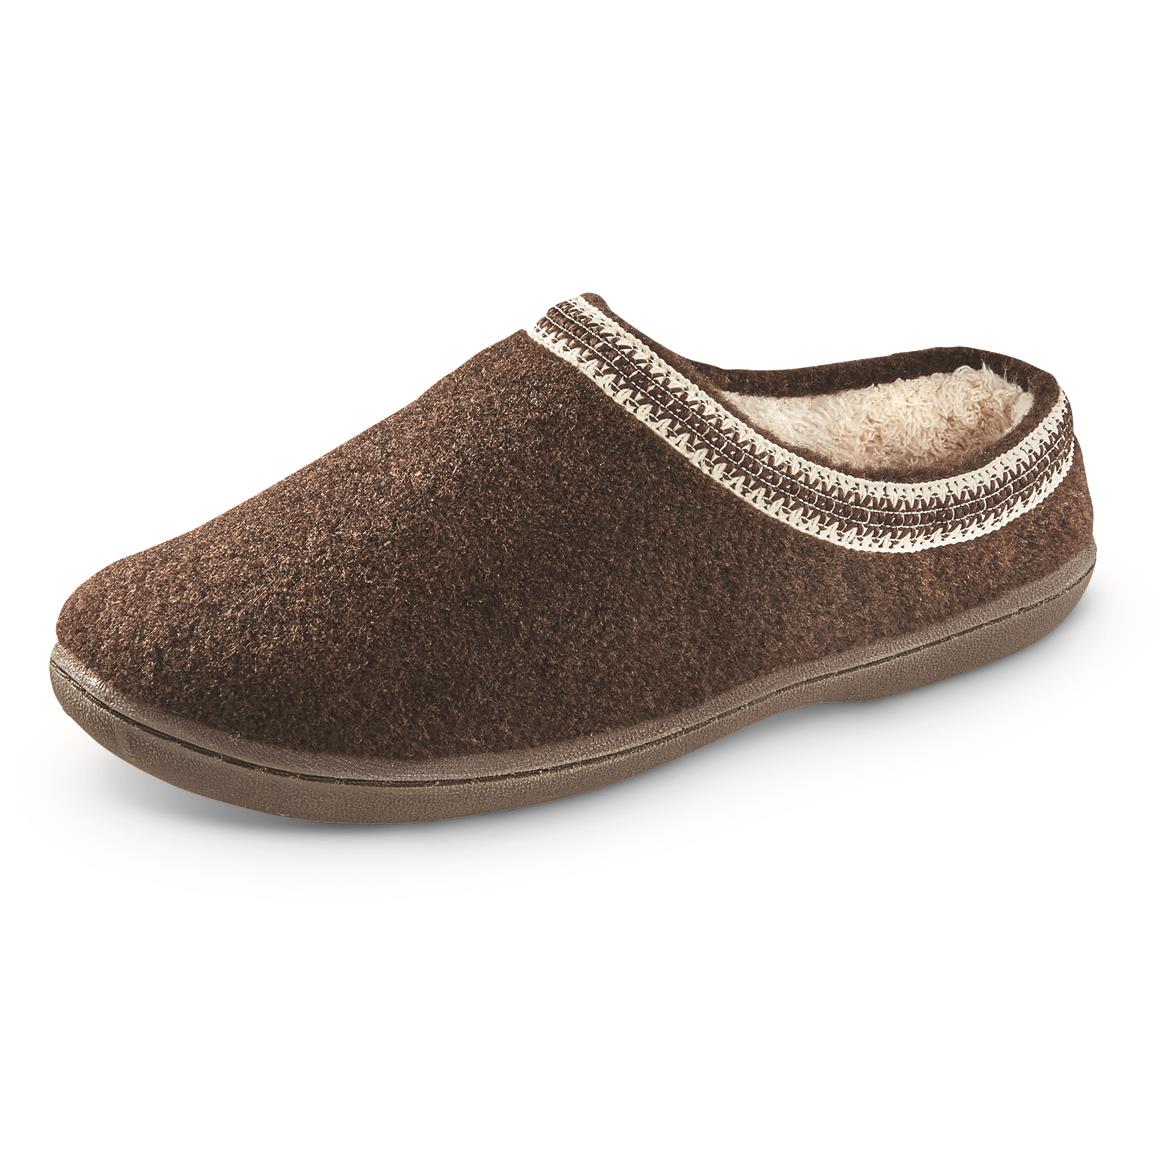 women's wool clog slippers